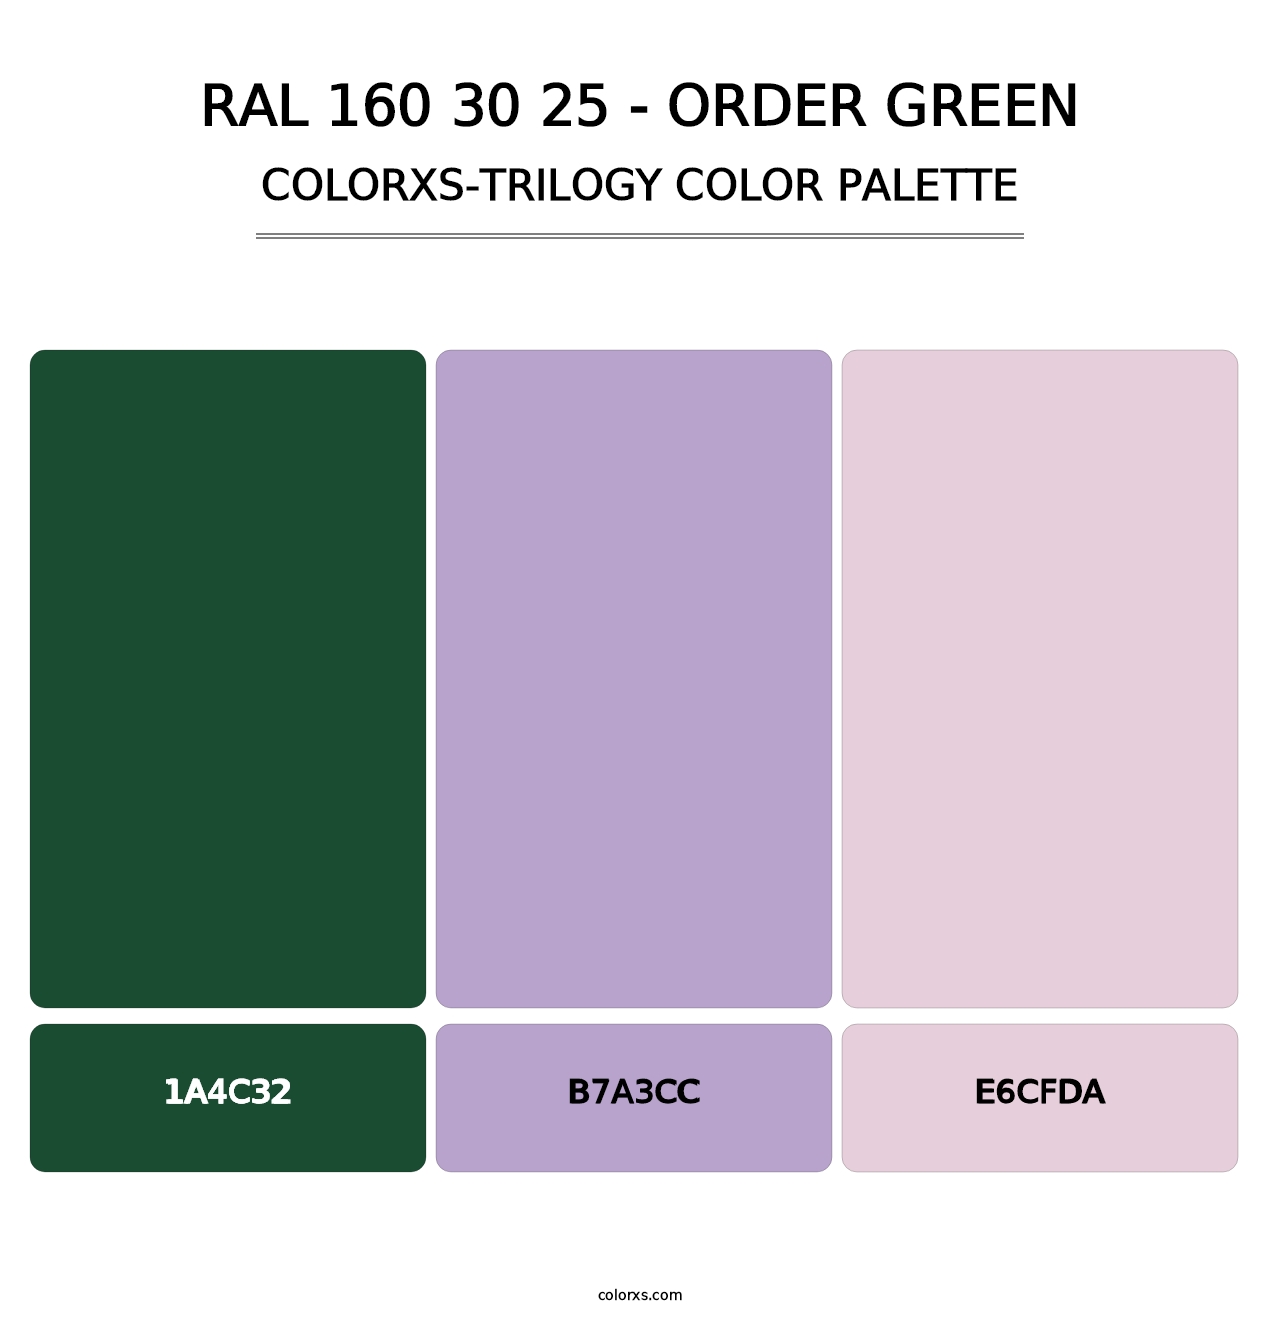 RAL 160 30 25 - Order Green - Colorxs Trilogy Palette